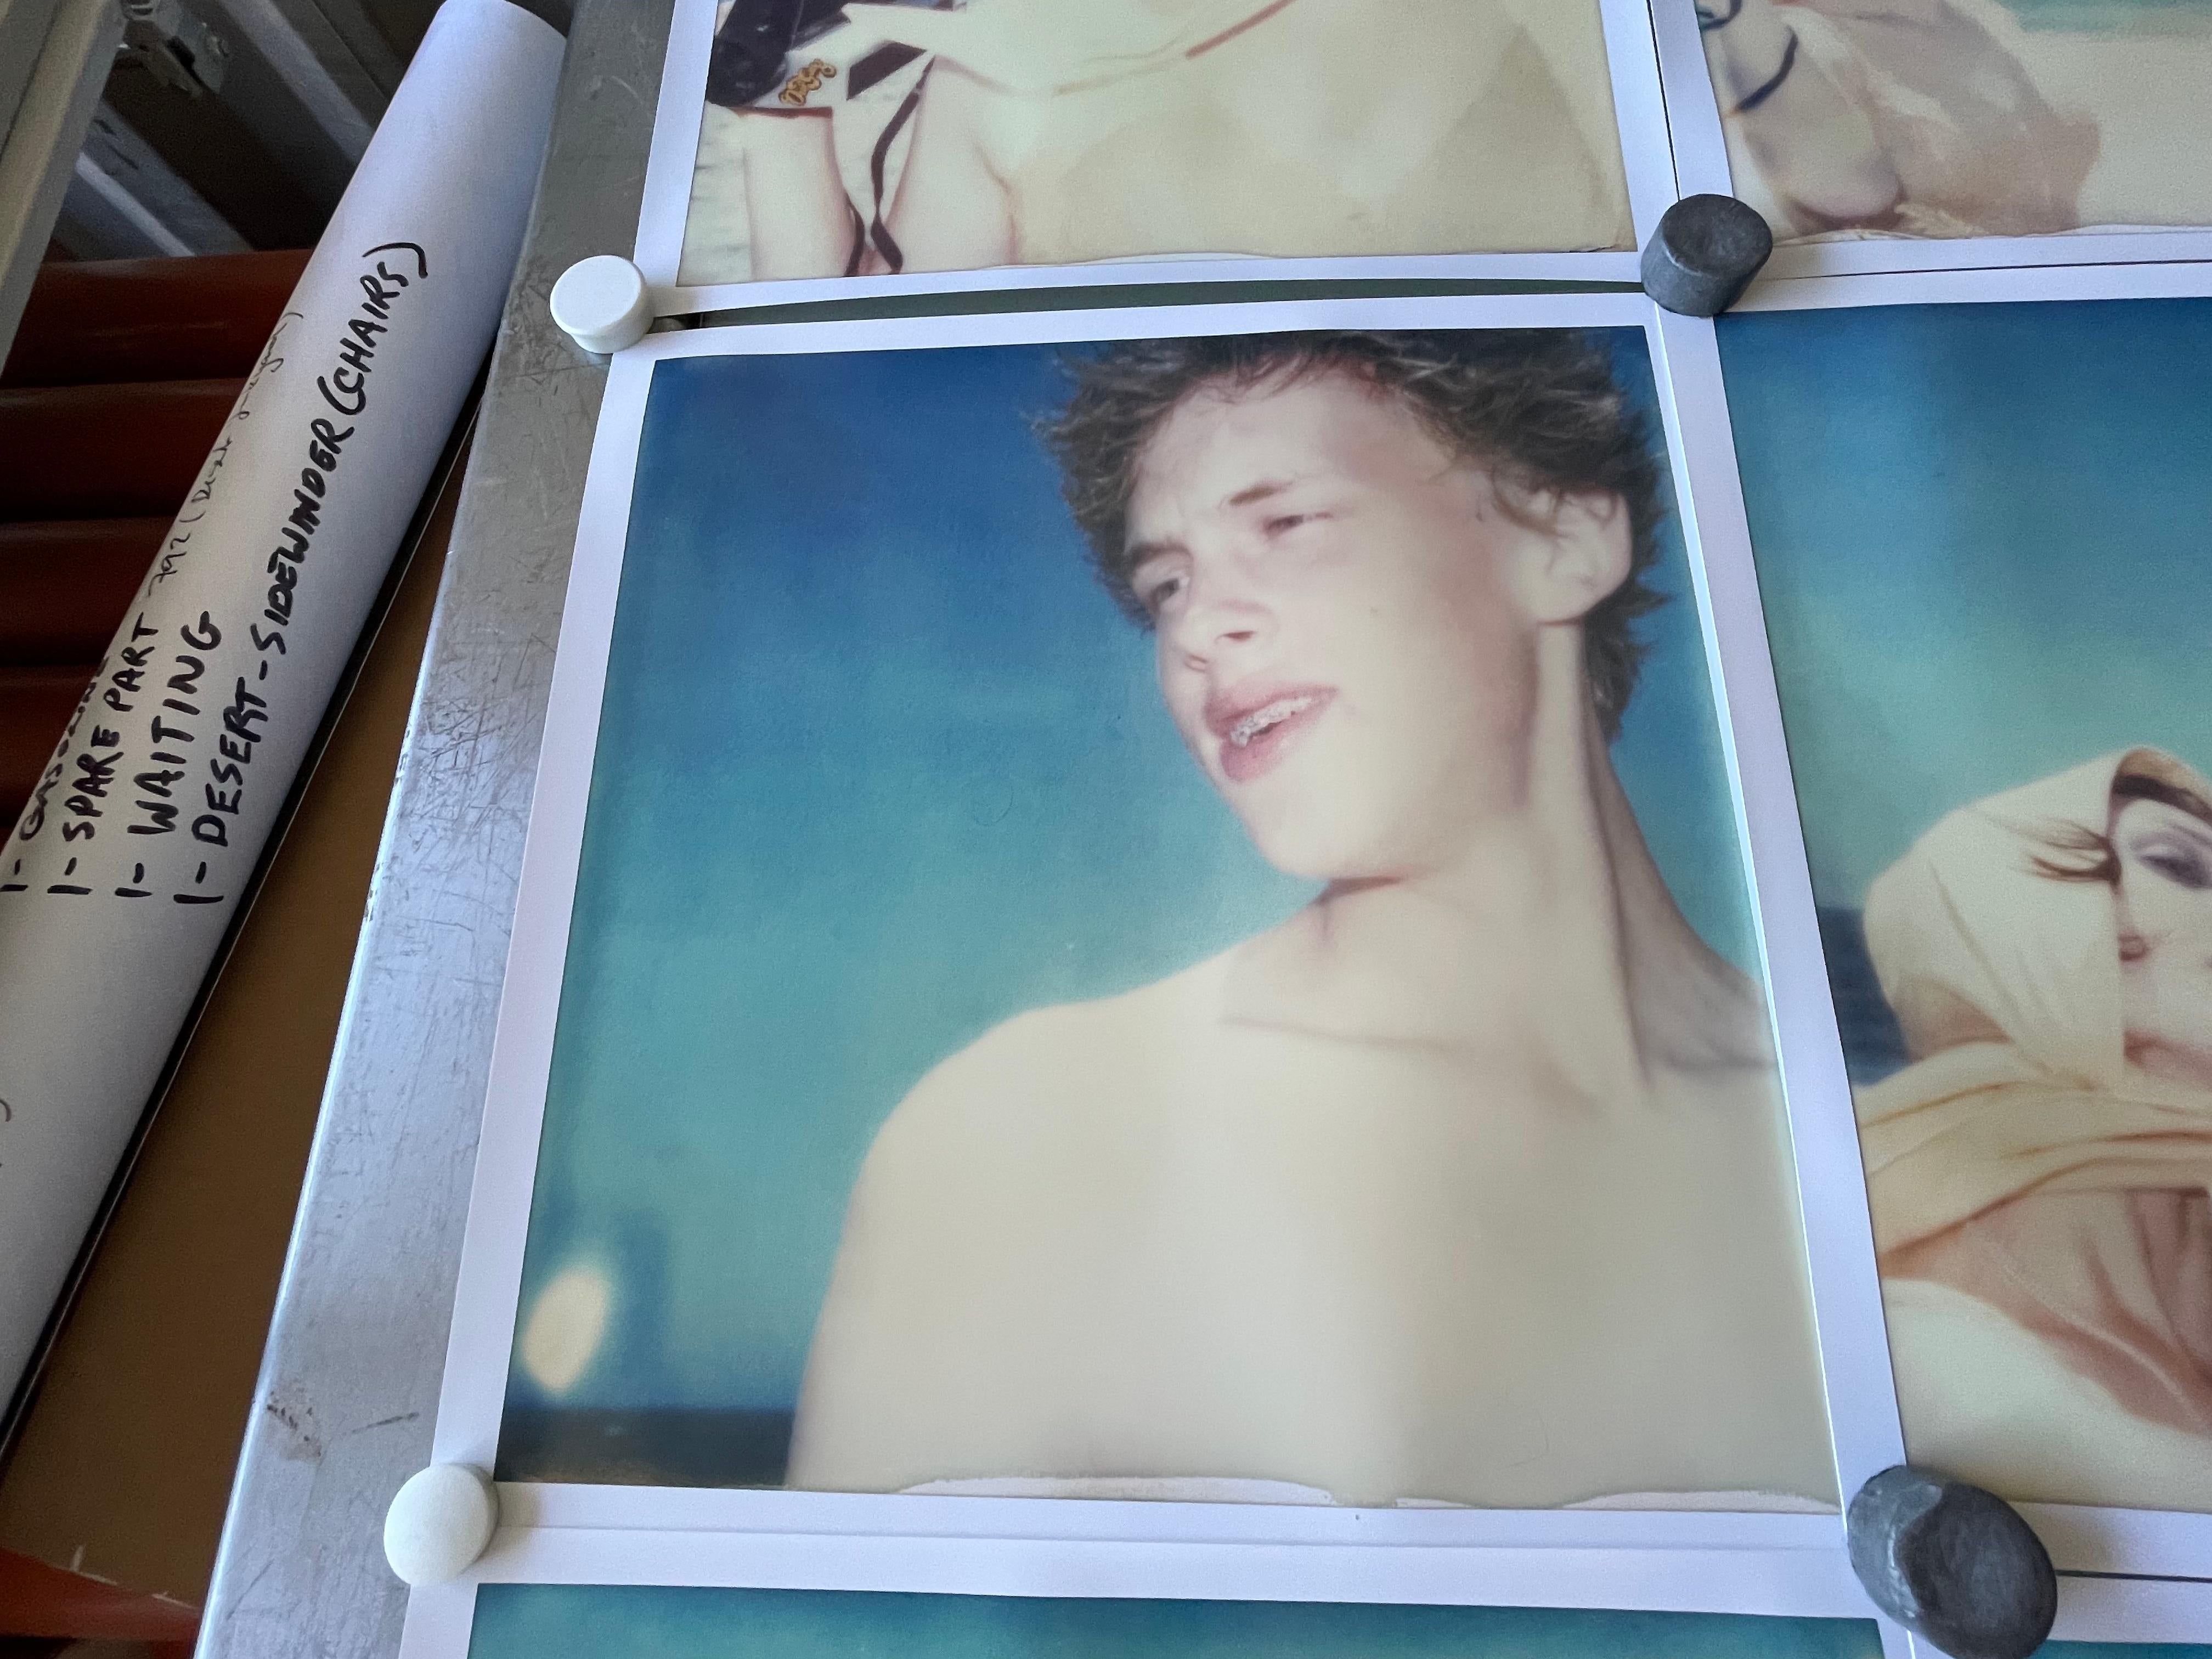 The Diva and the Boy (Beachshoot) - 9 pieces - Polaroid, Vintage, Contemporary 1